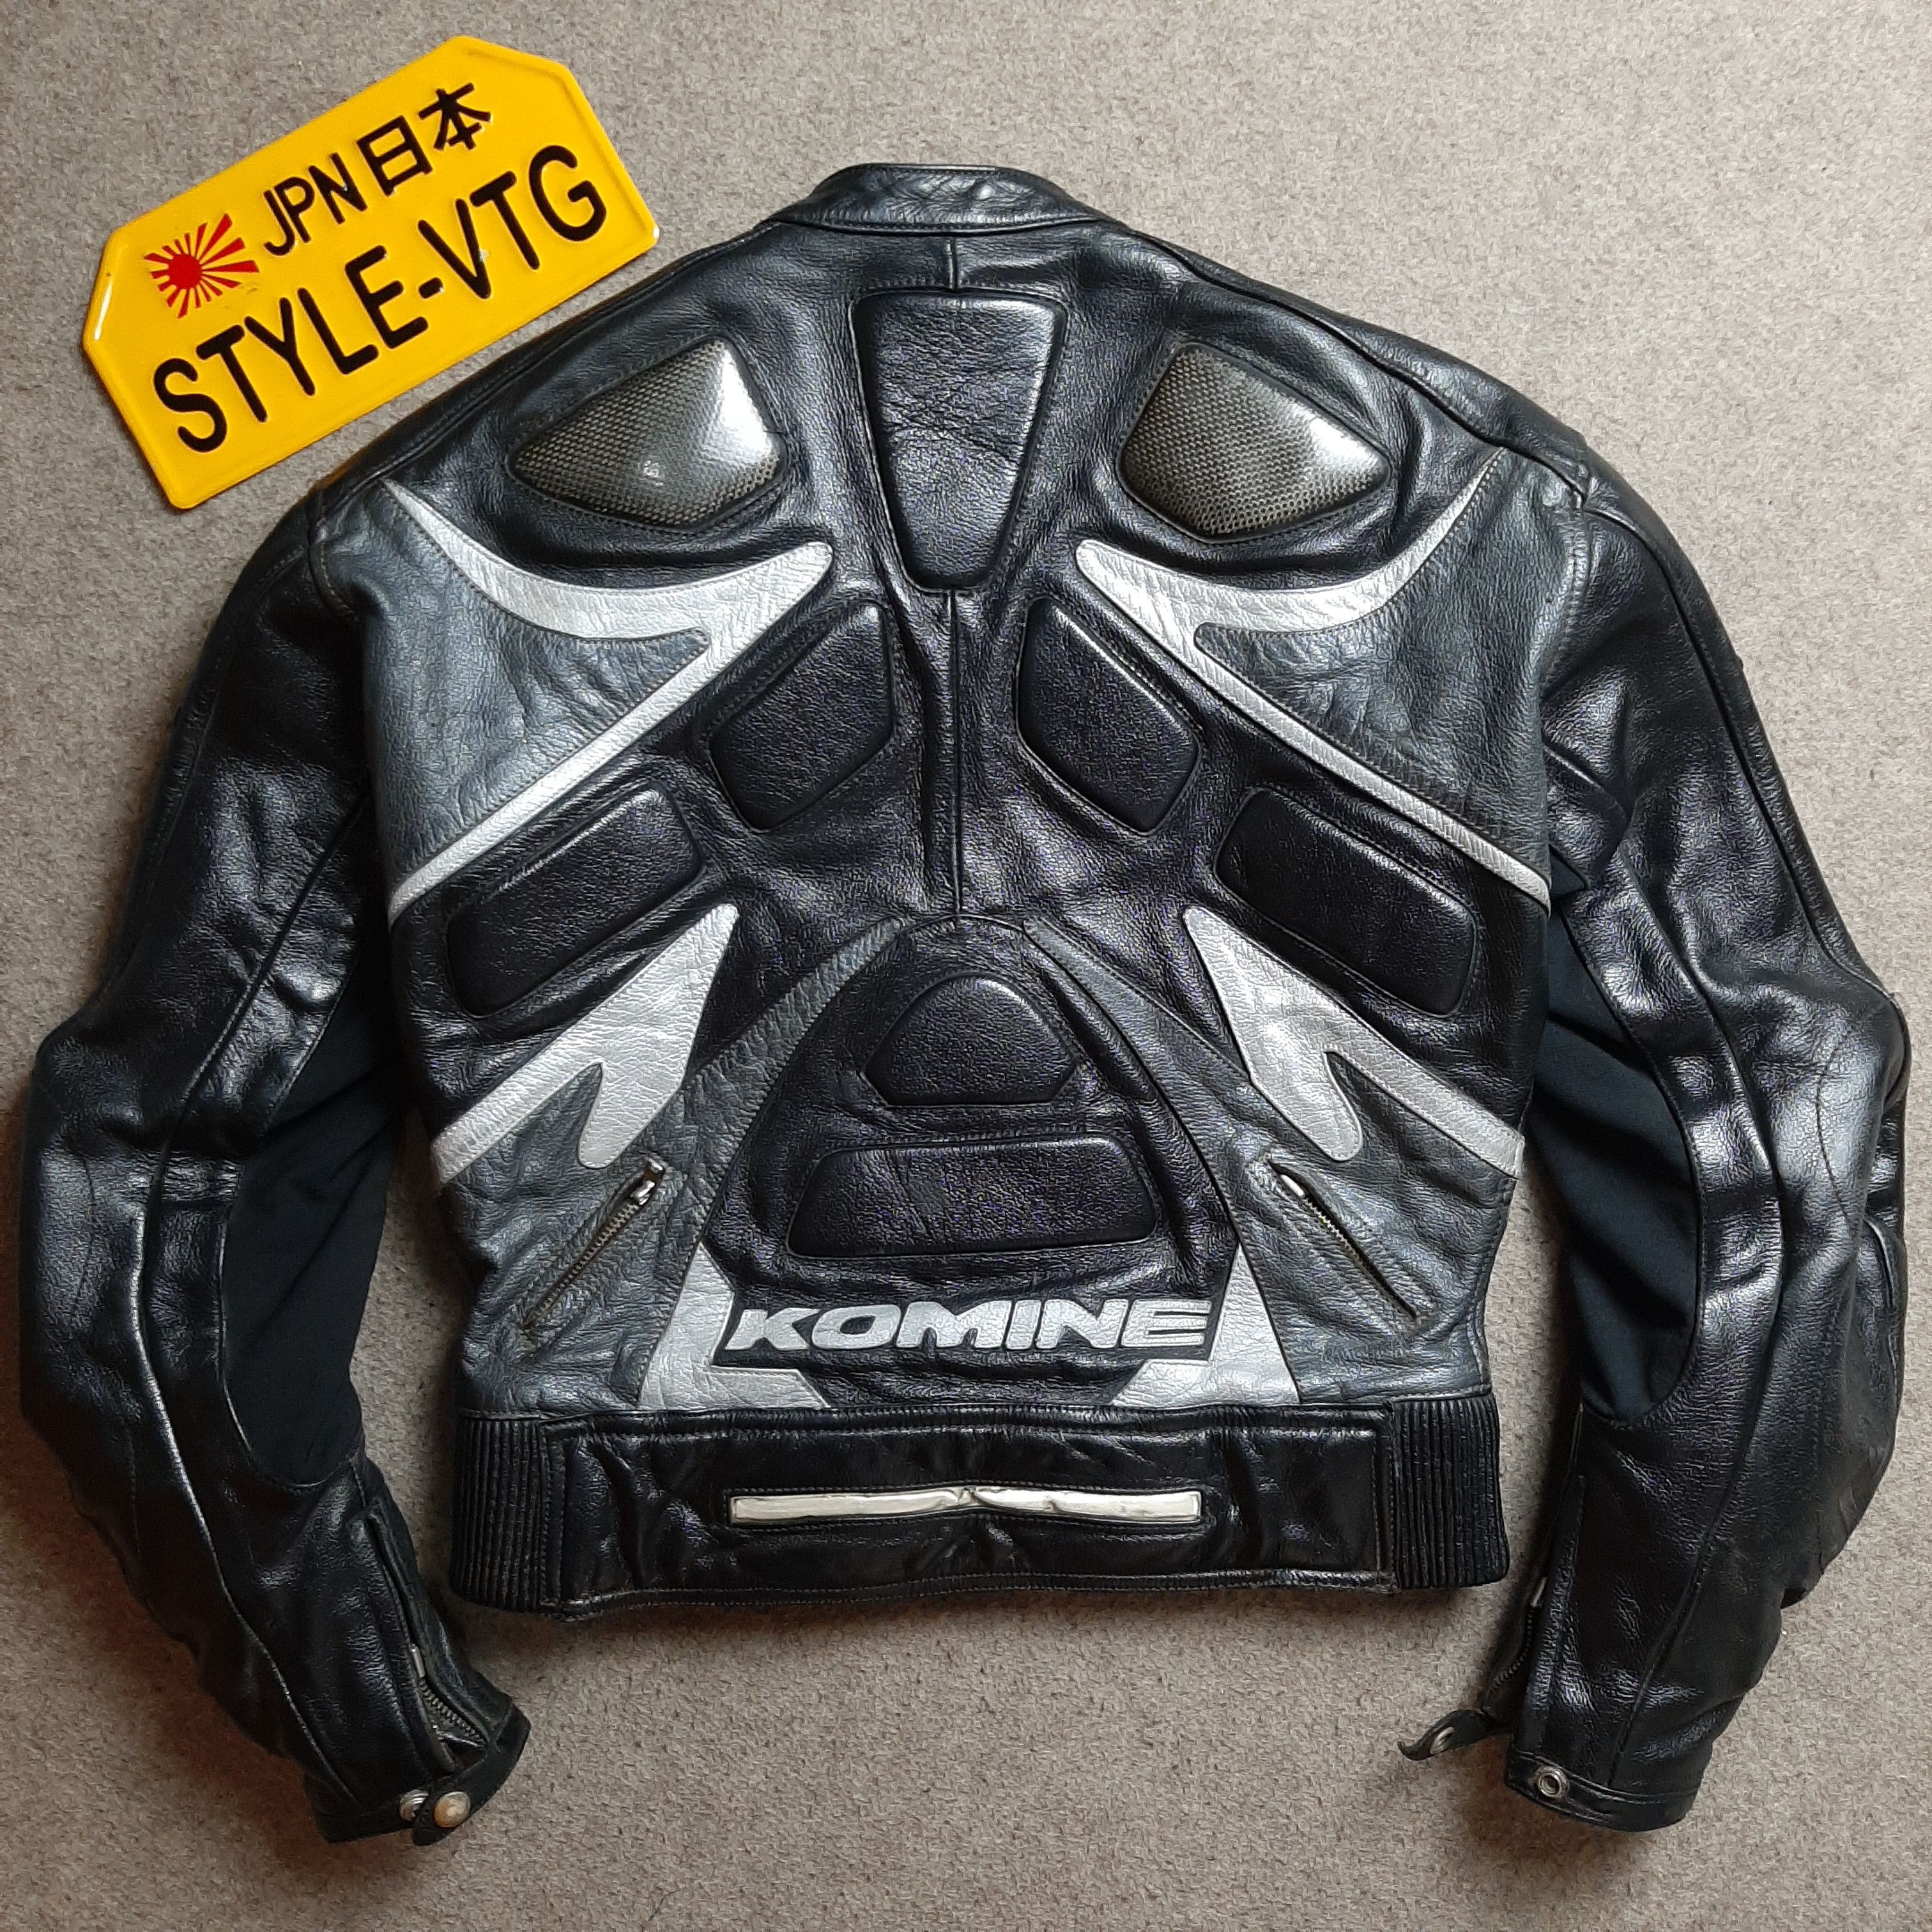 Archival Clothing Komine spazzio racing leather motorcycle jacket